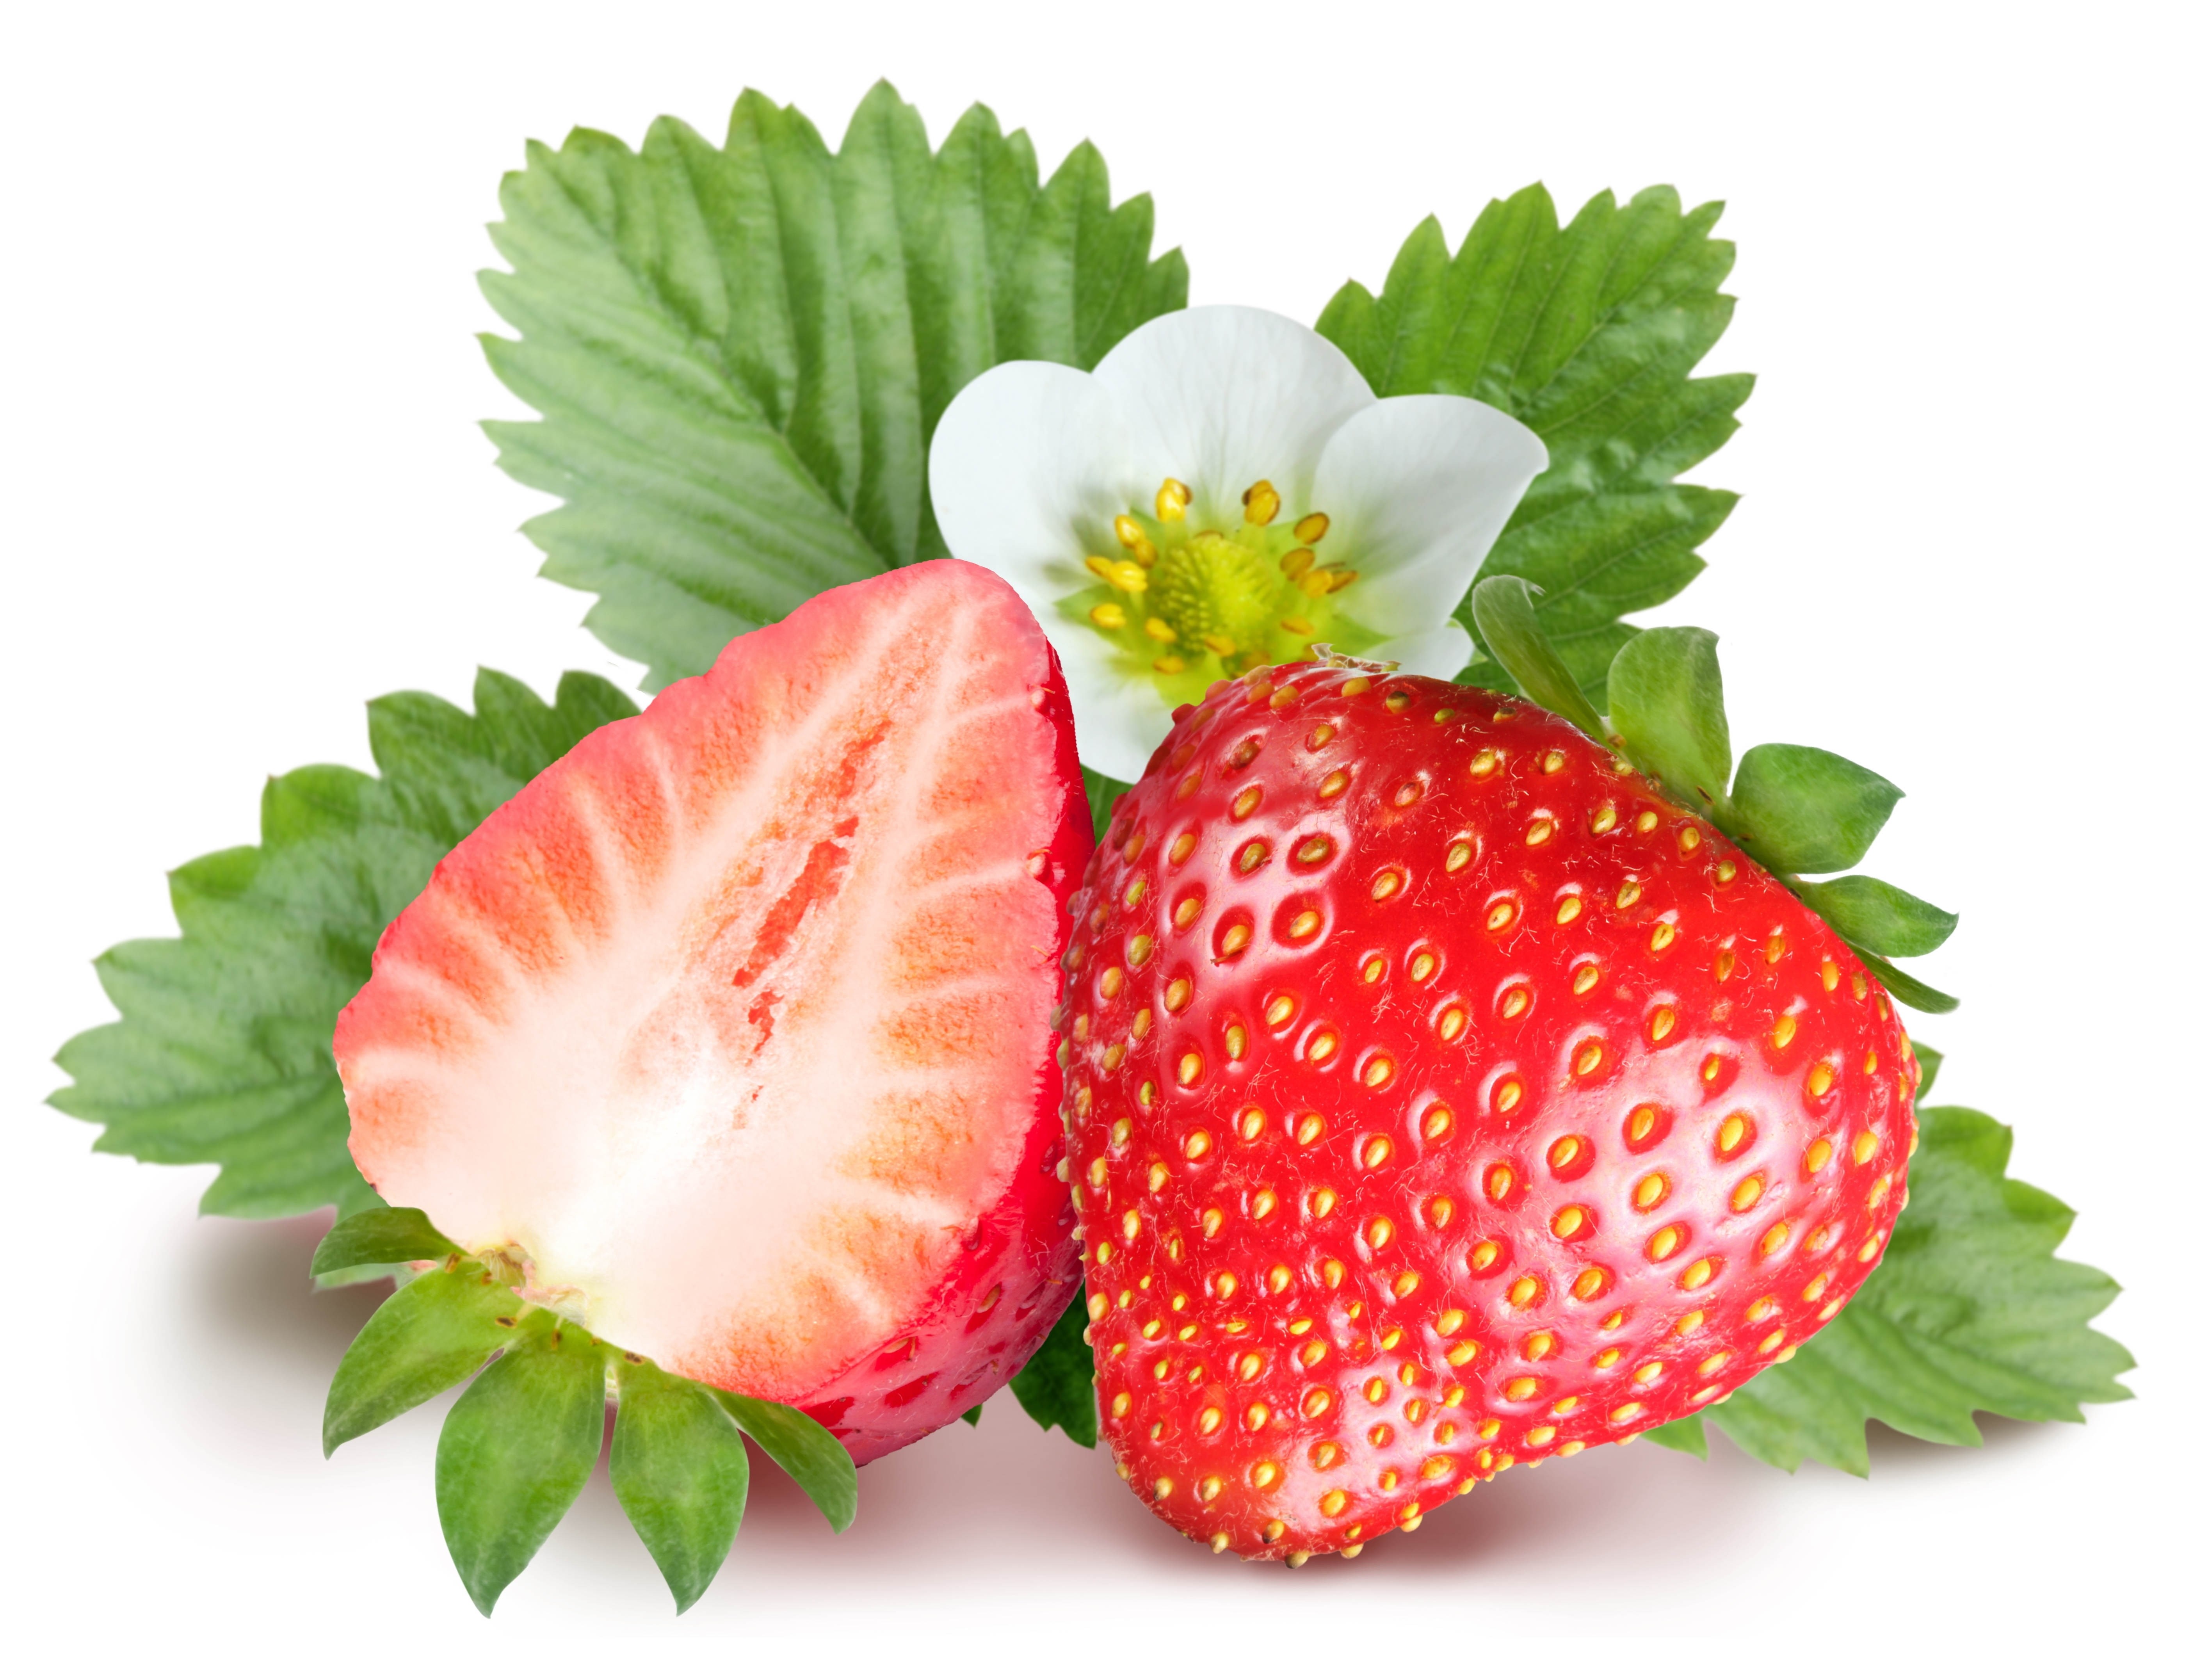 strawberry plant flower image. Strawberry image, strawberry